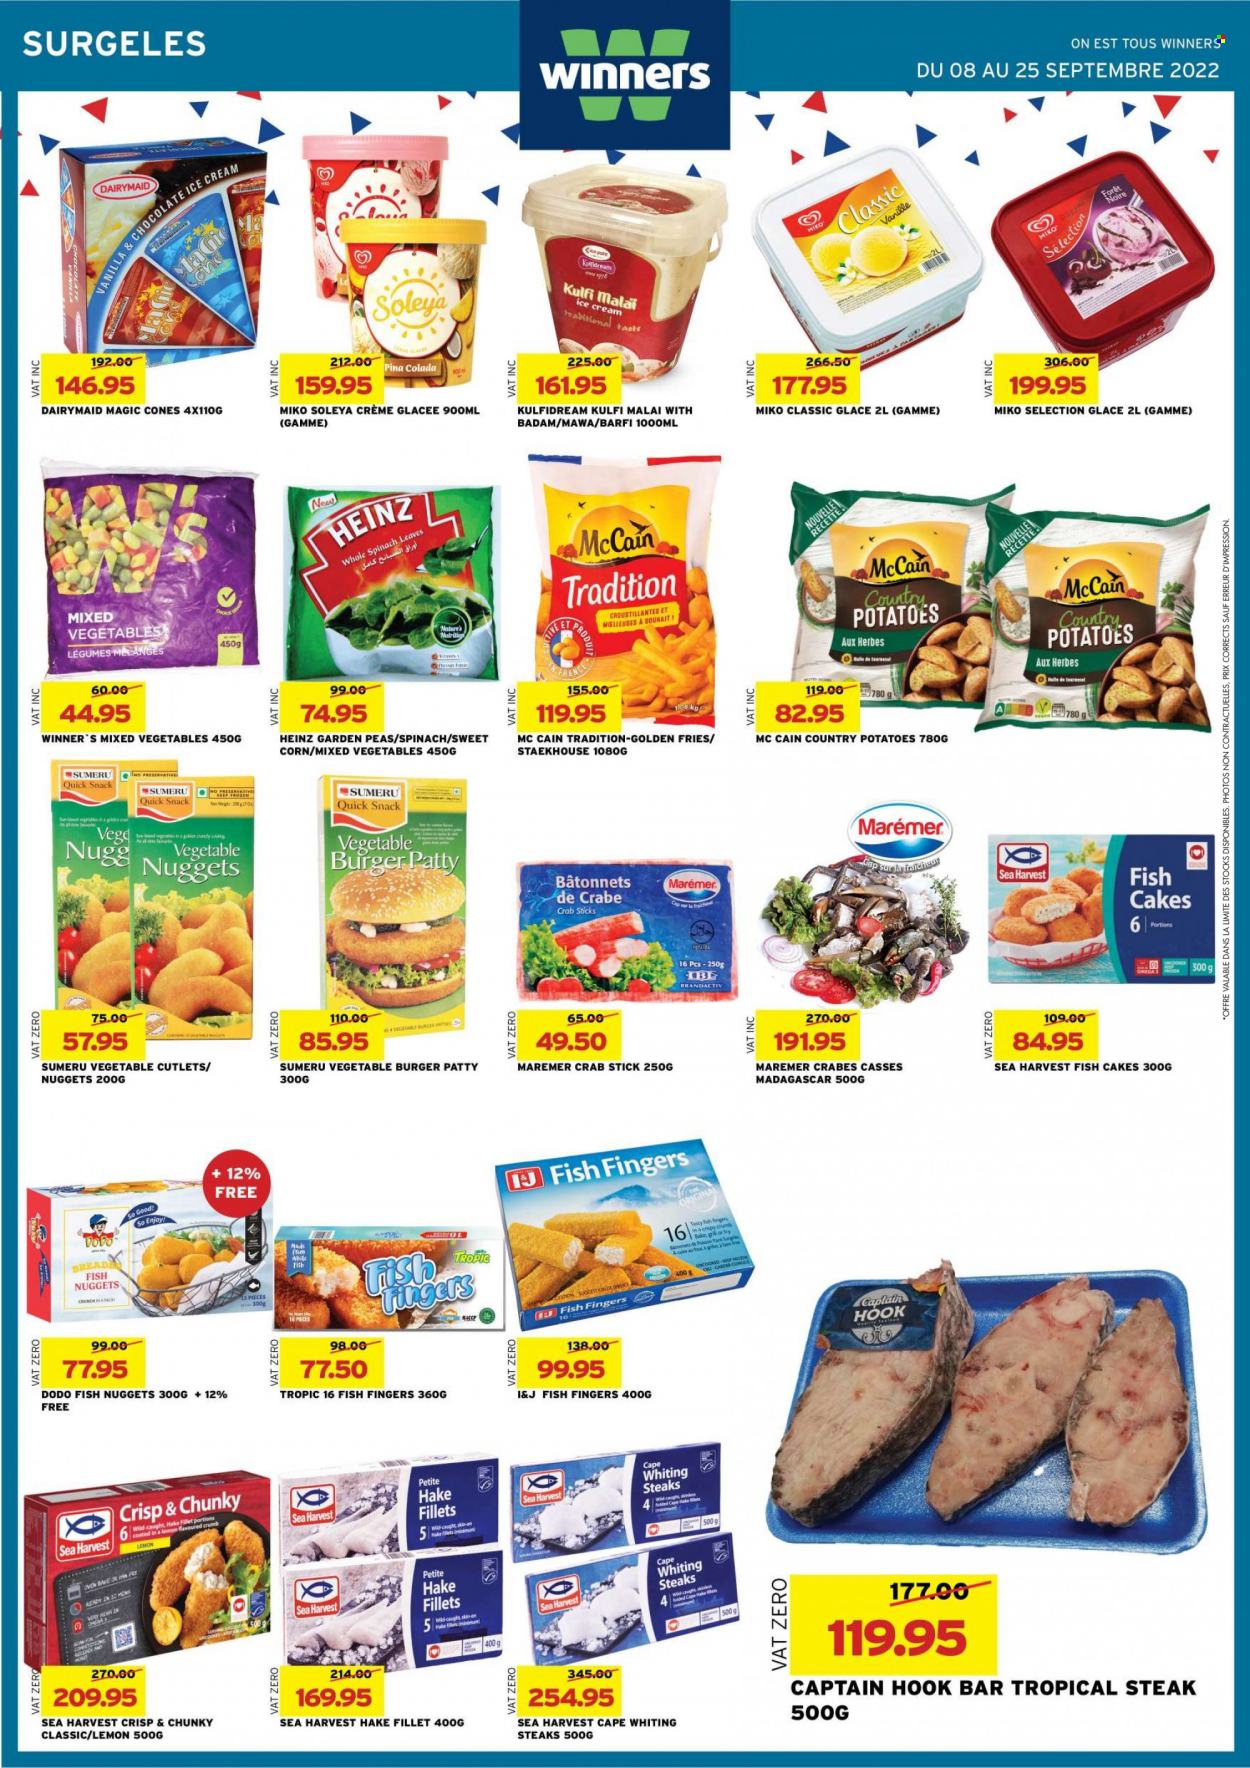 <magasin> - <du DD/MM/YYYY au DD/MM/YYYY> - Produits soldés - ,<products from flyers>. Page 20. 